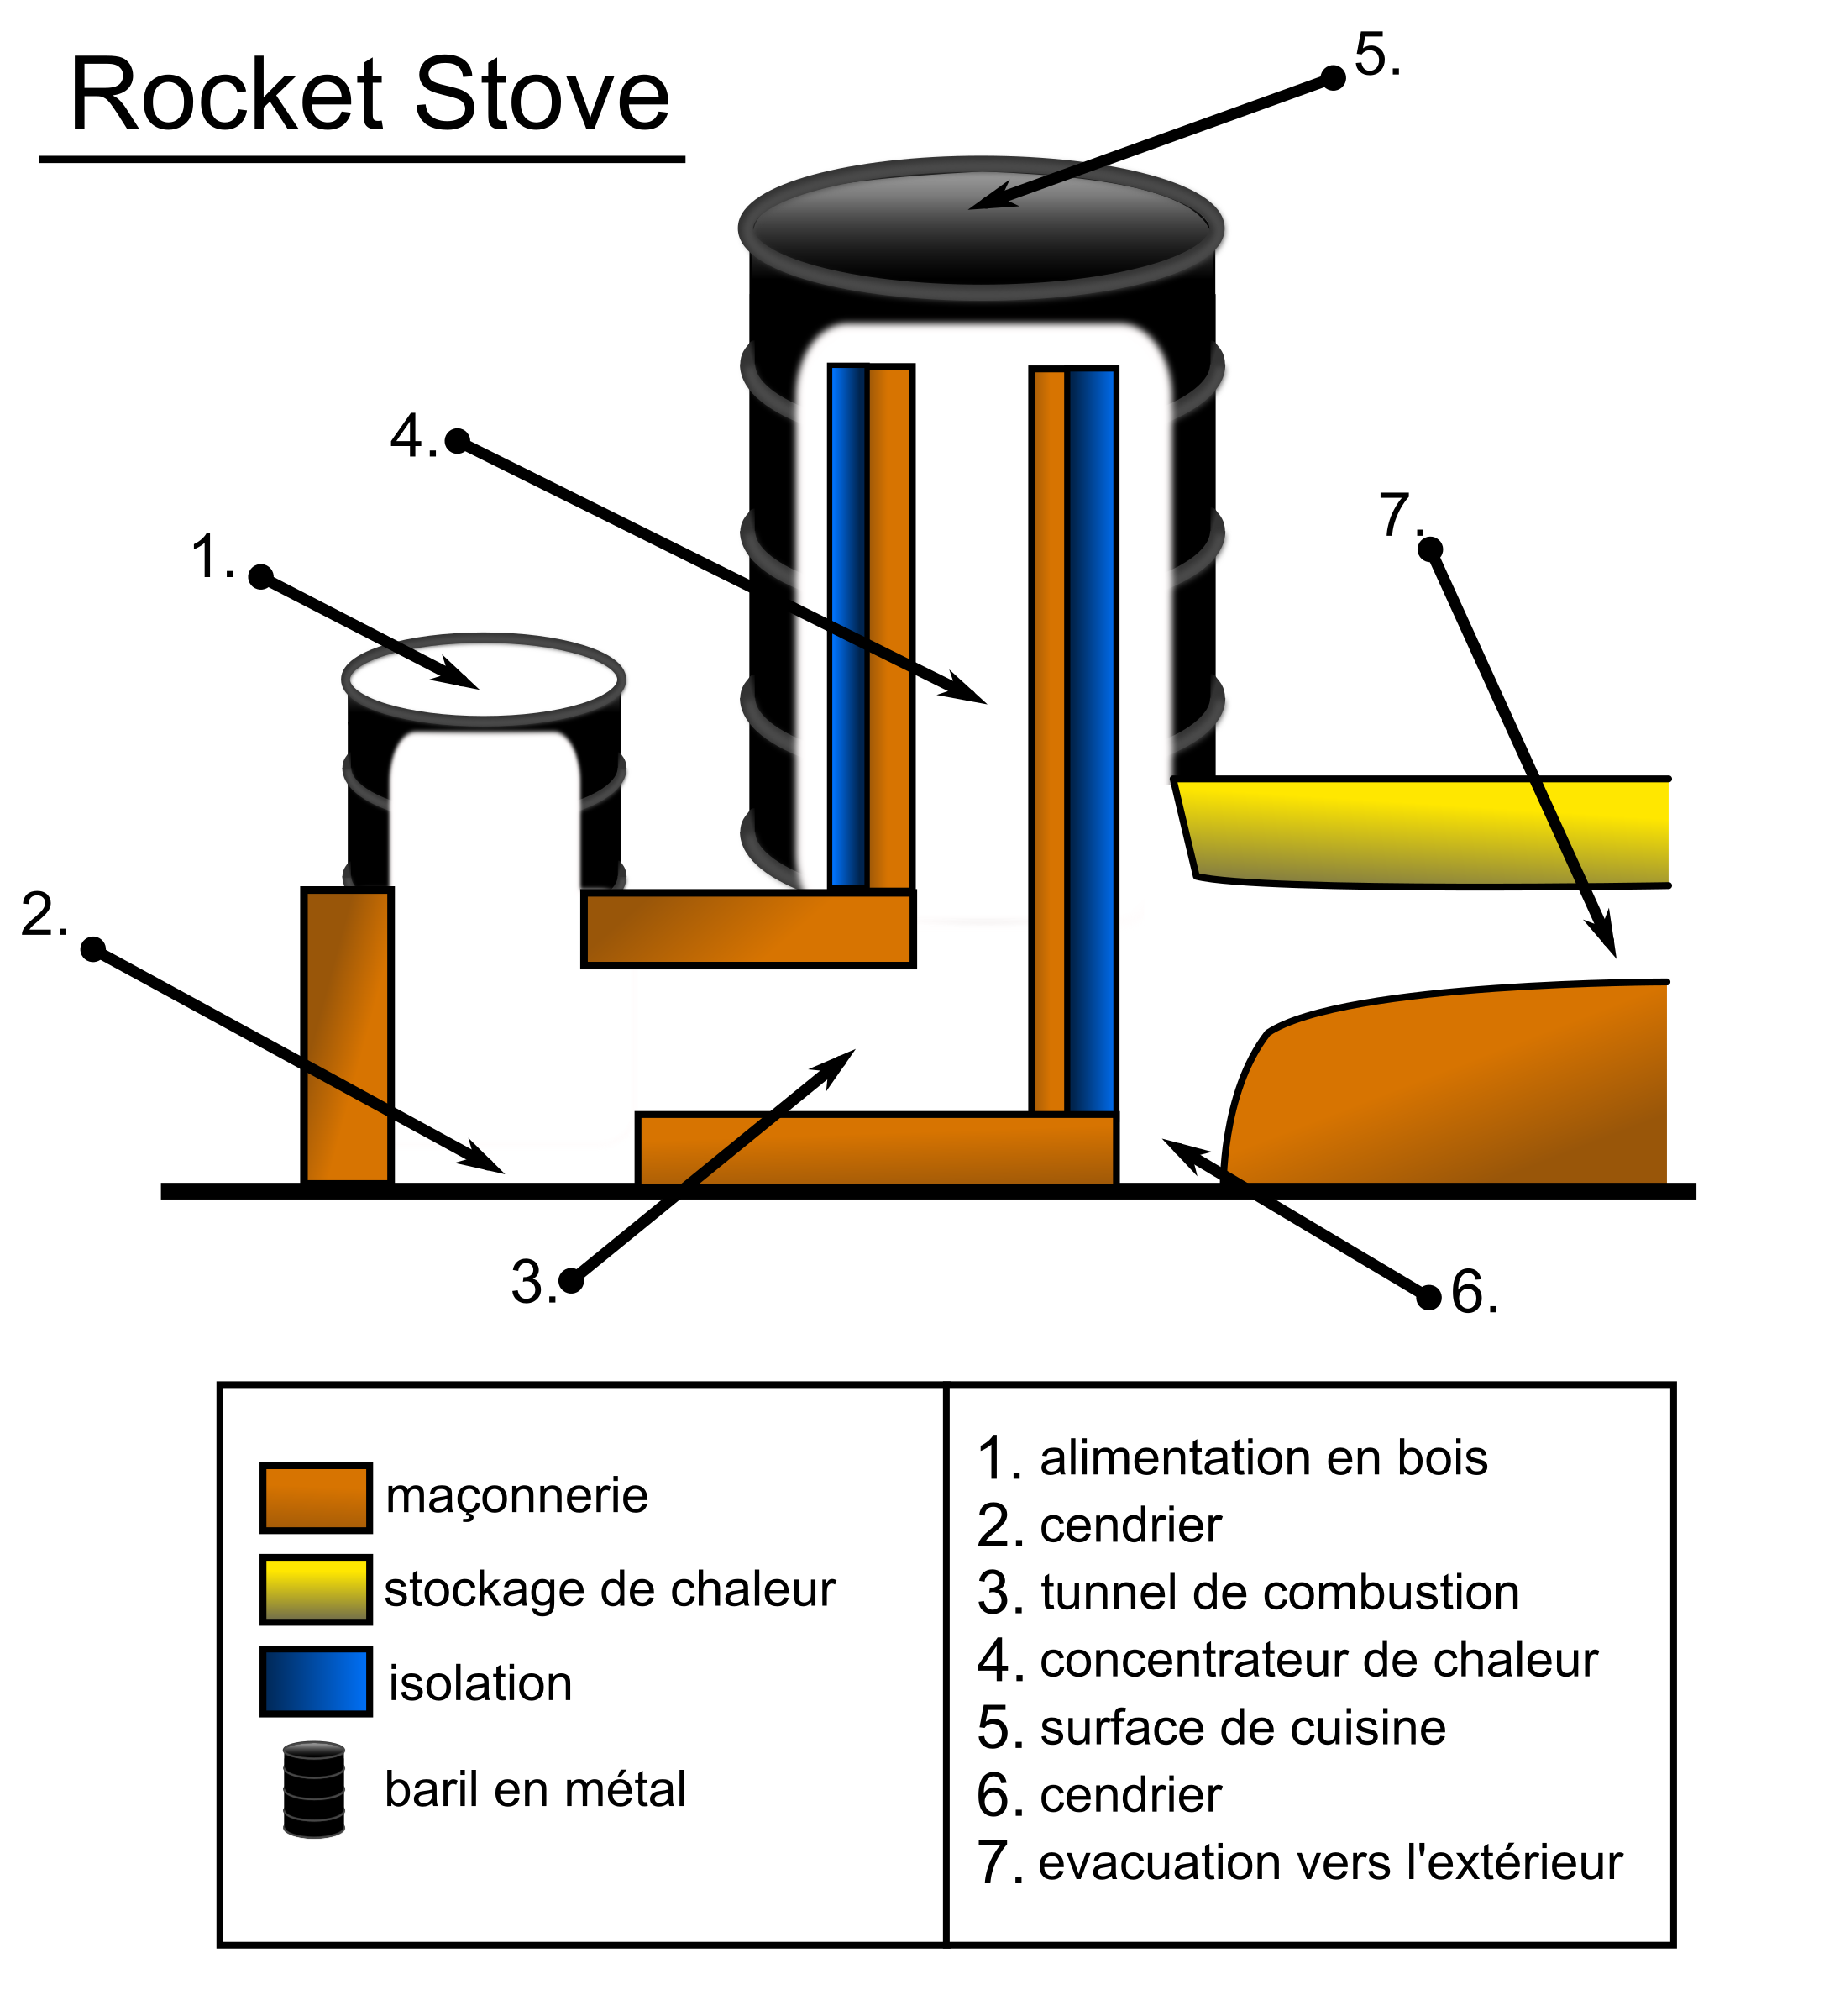 Rocket Stove schema Clip arts